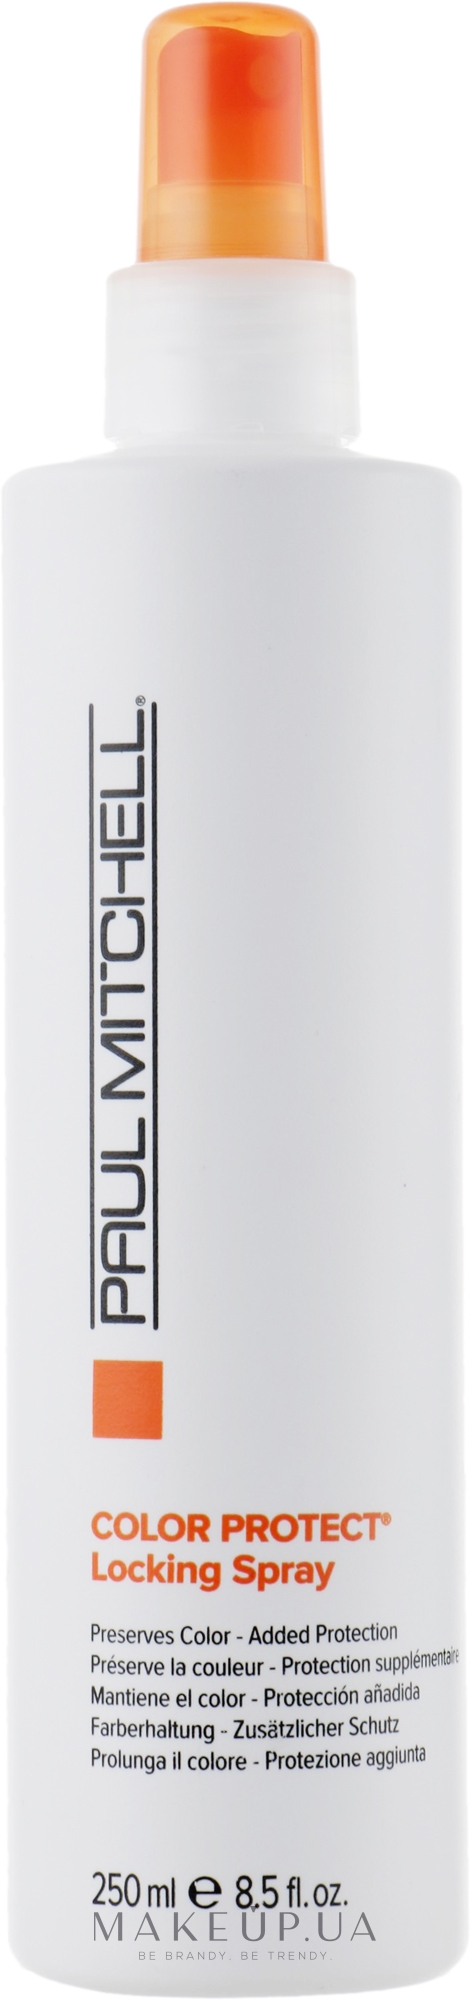 Спрей для фарбованого волосся - Paul Mitchell ColorCare Color Protect Locking Spray — фото 250ml